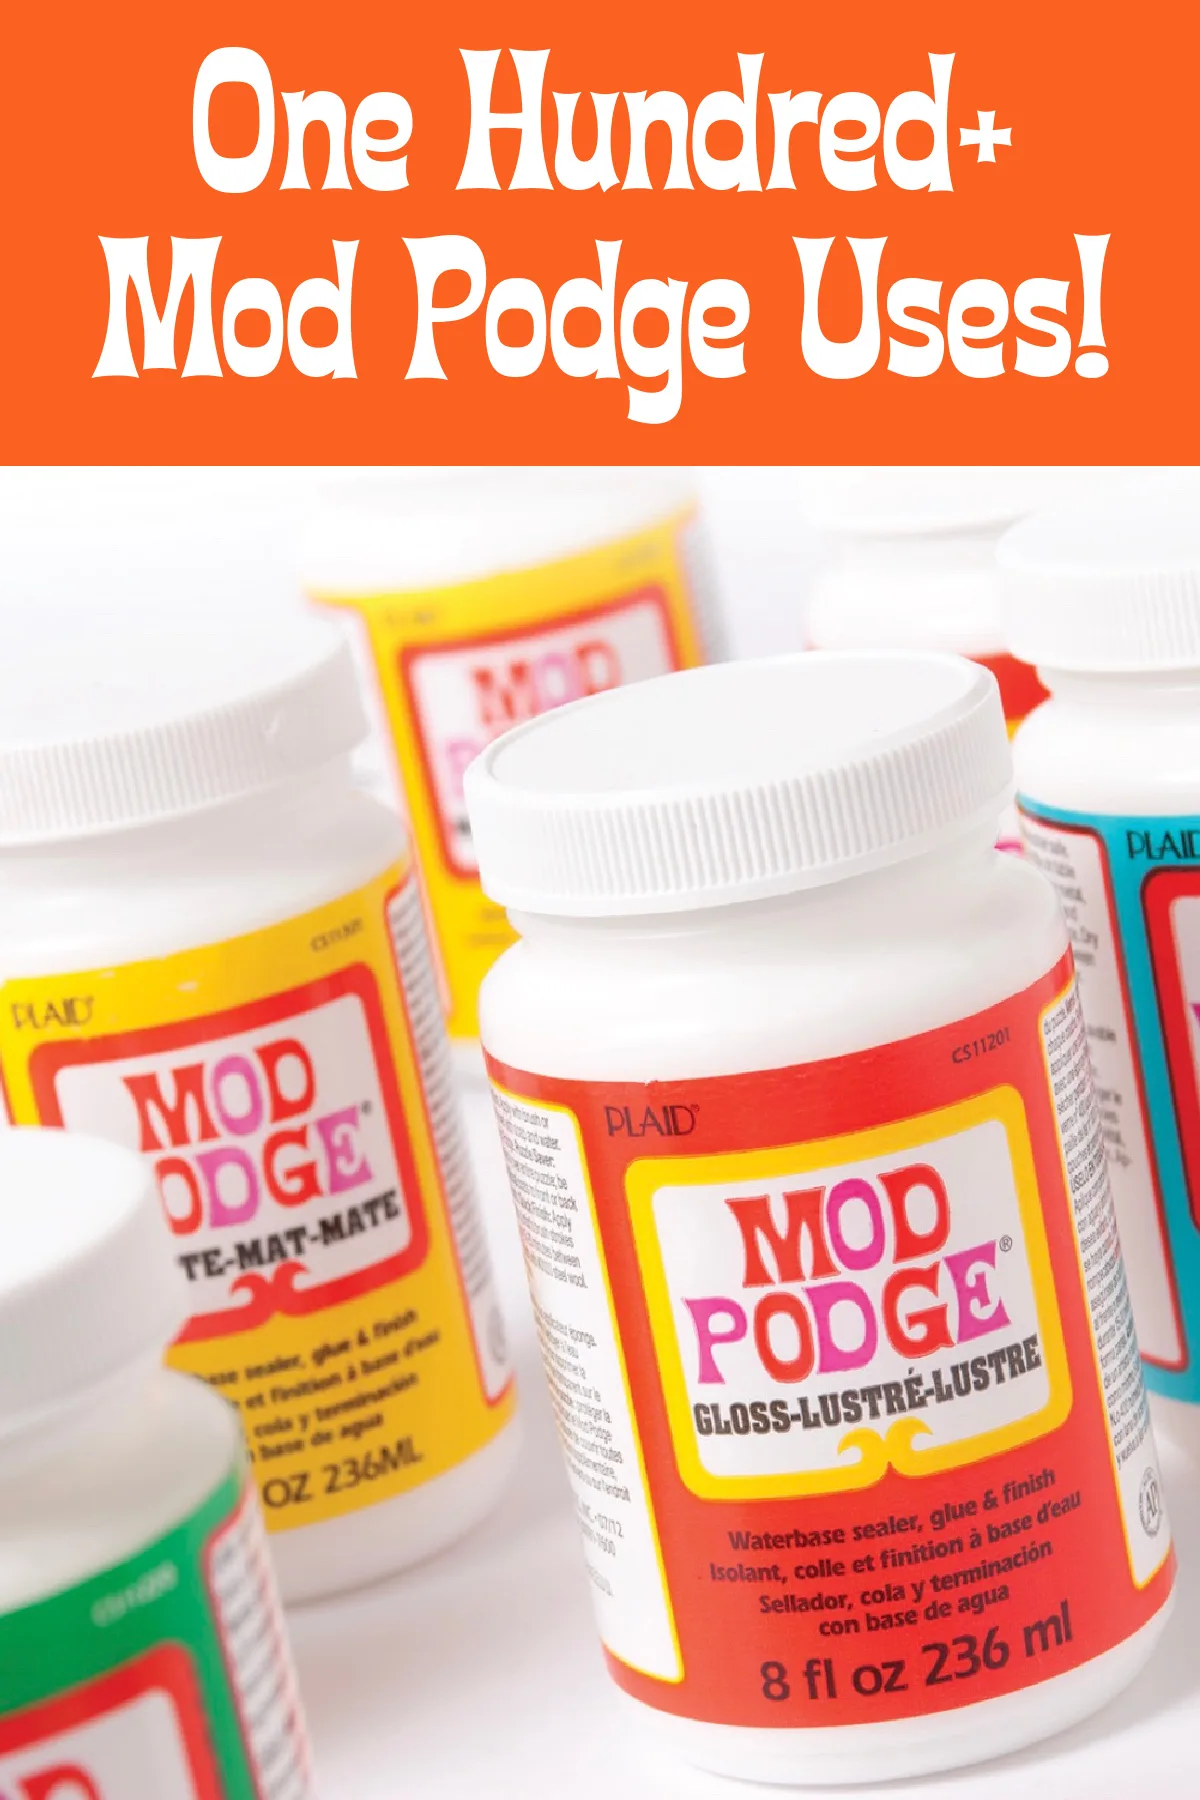 101 Mod Podge Uses